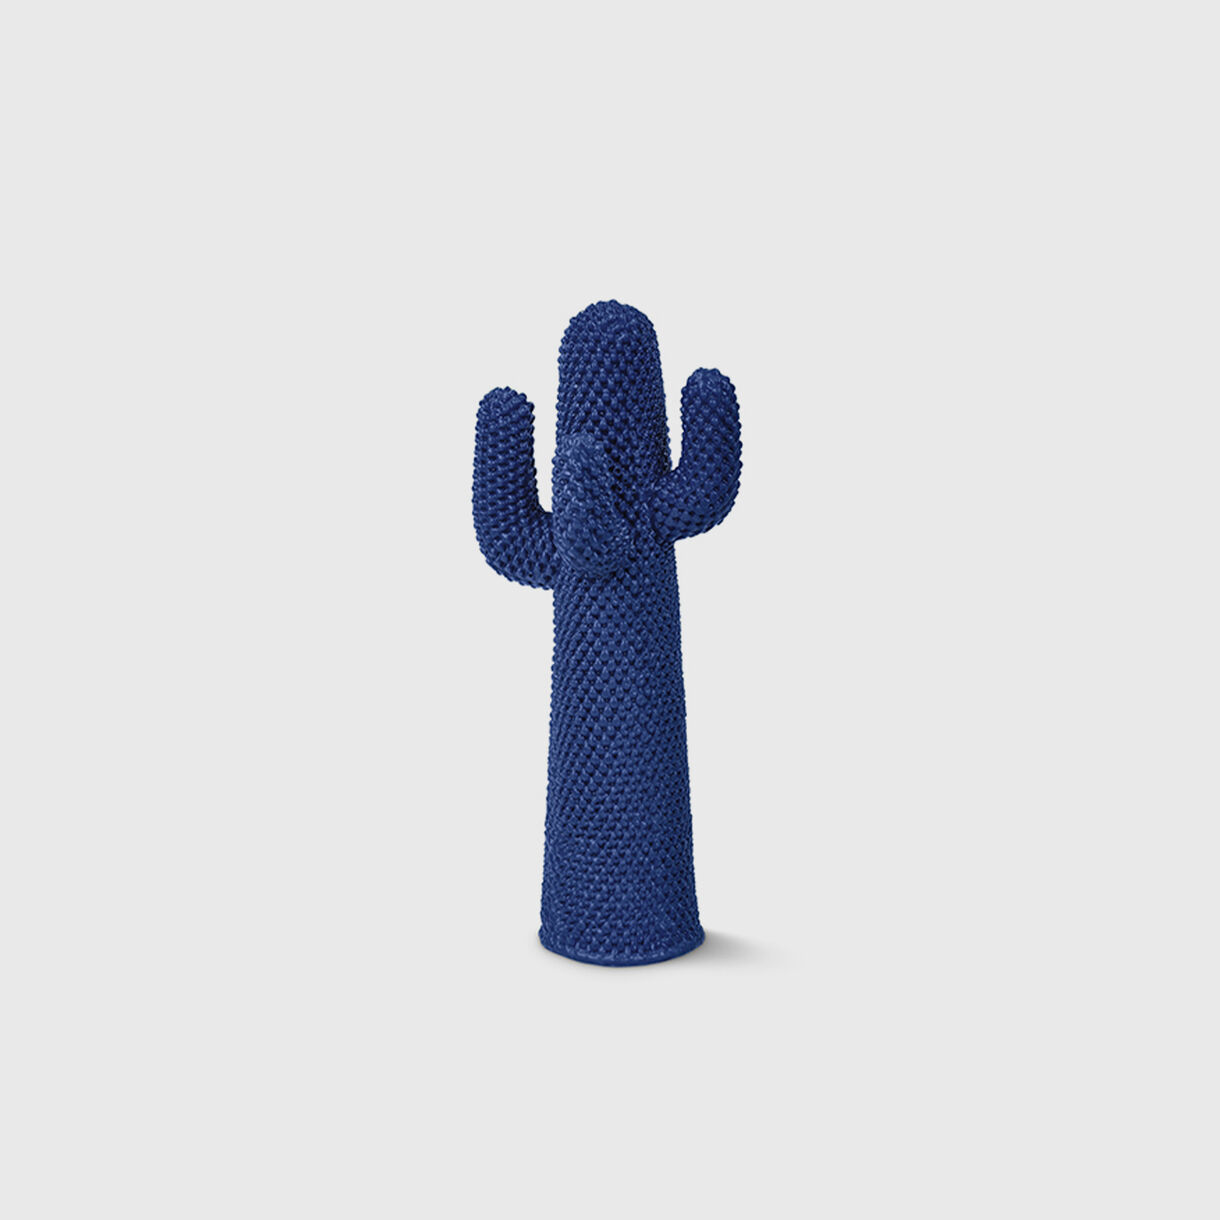 Guframini Cactus, Lebleu